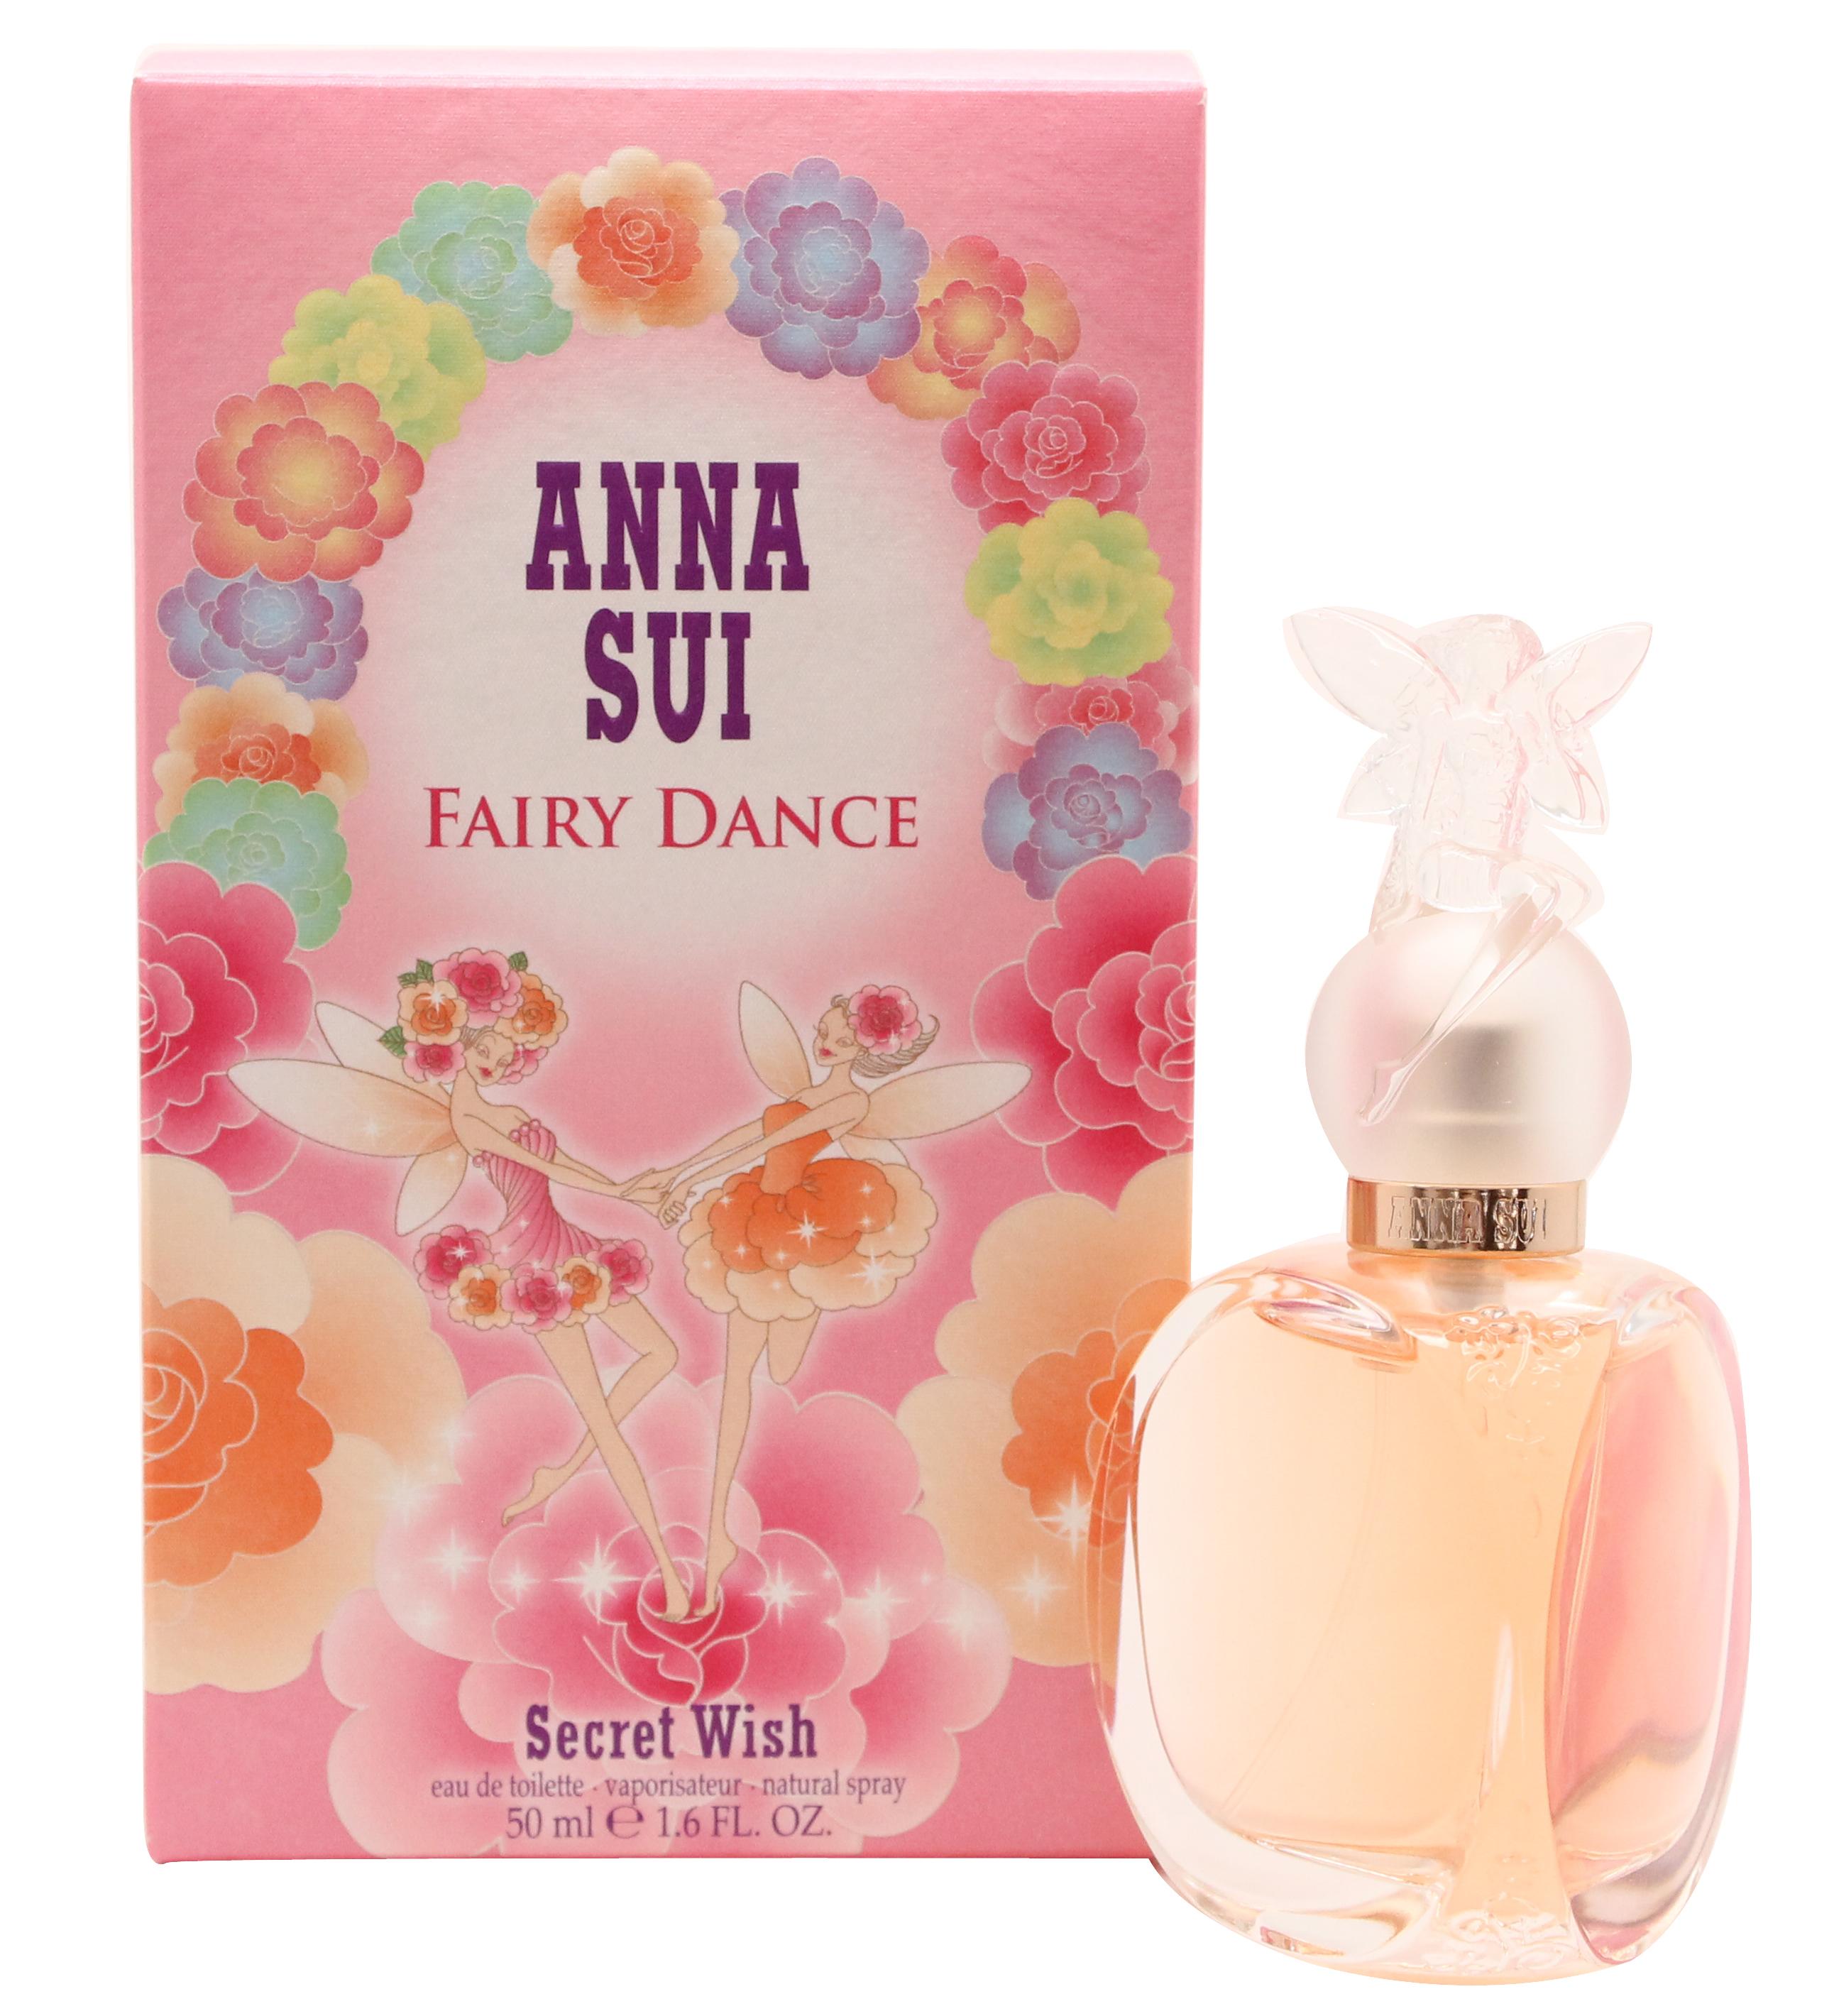 Anna Sui Fairy Dance Secret Wish Eau de Toilette 50ml Spray